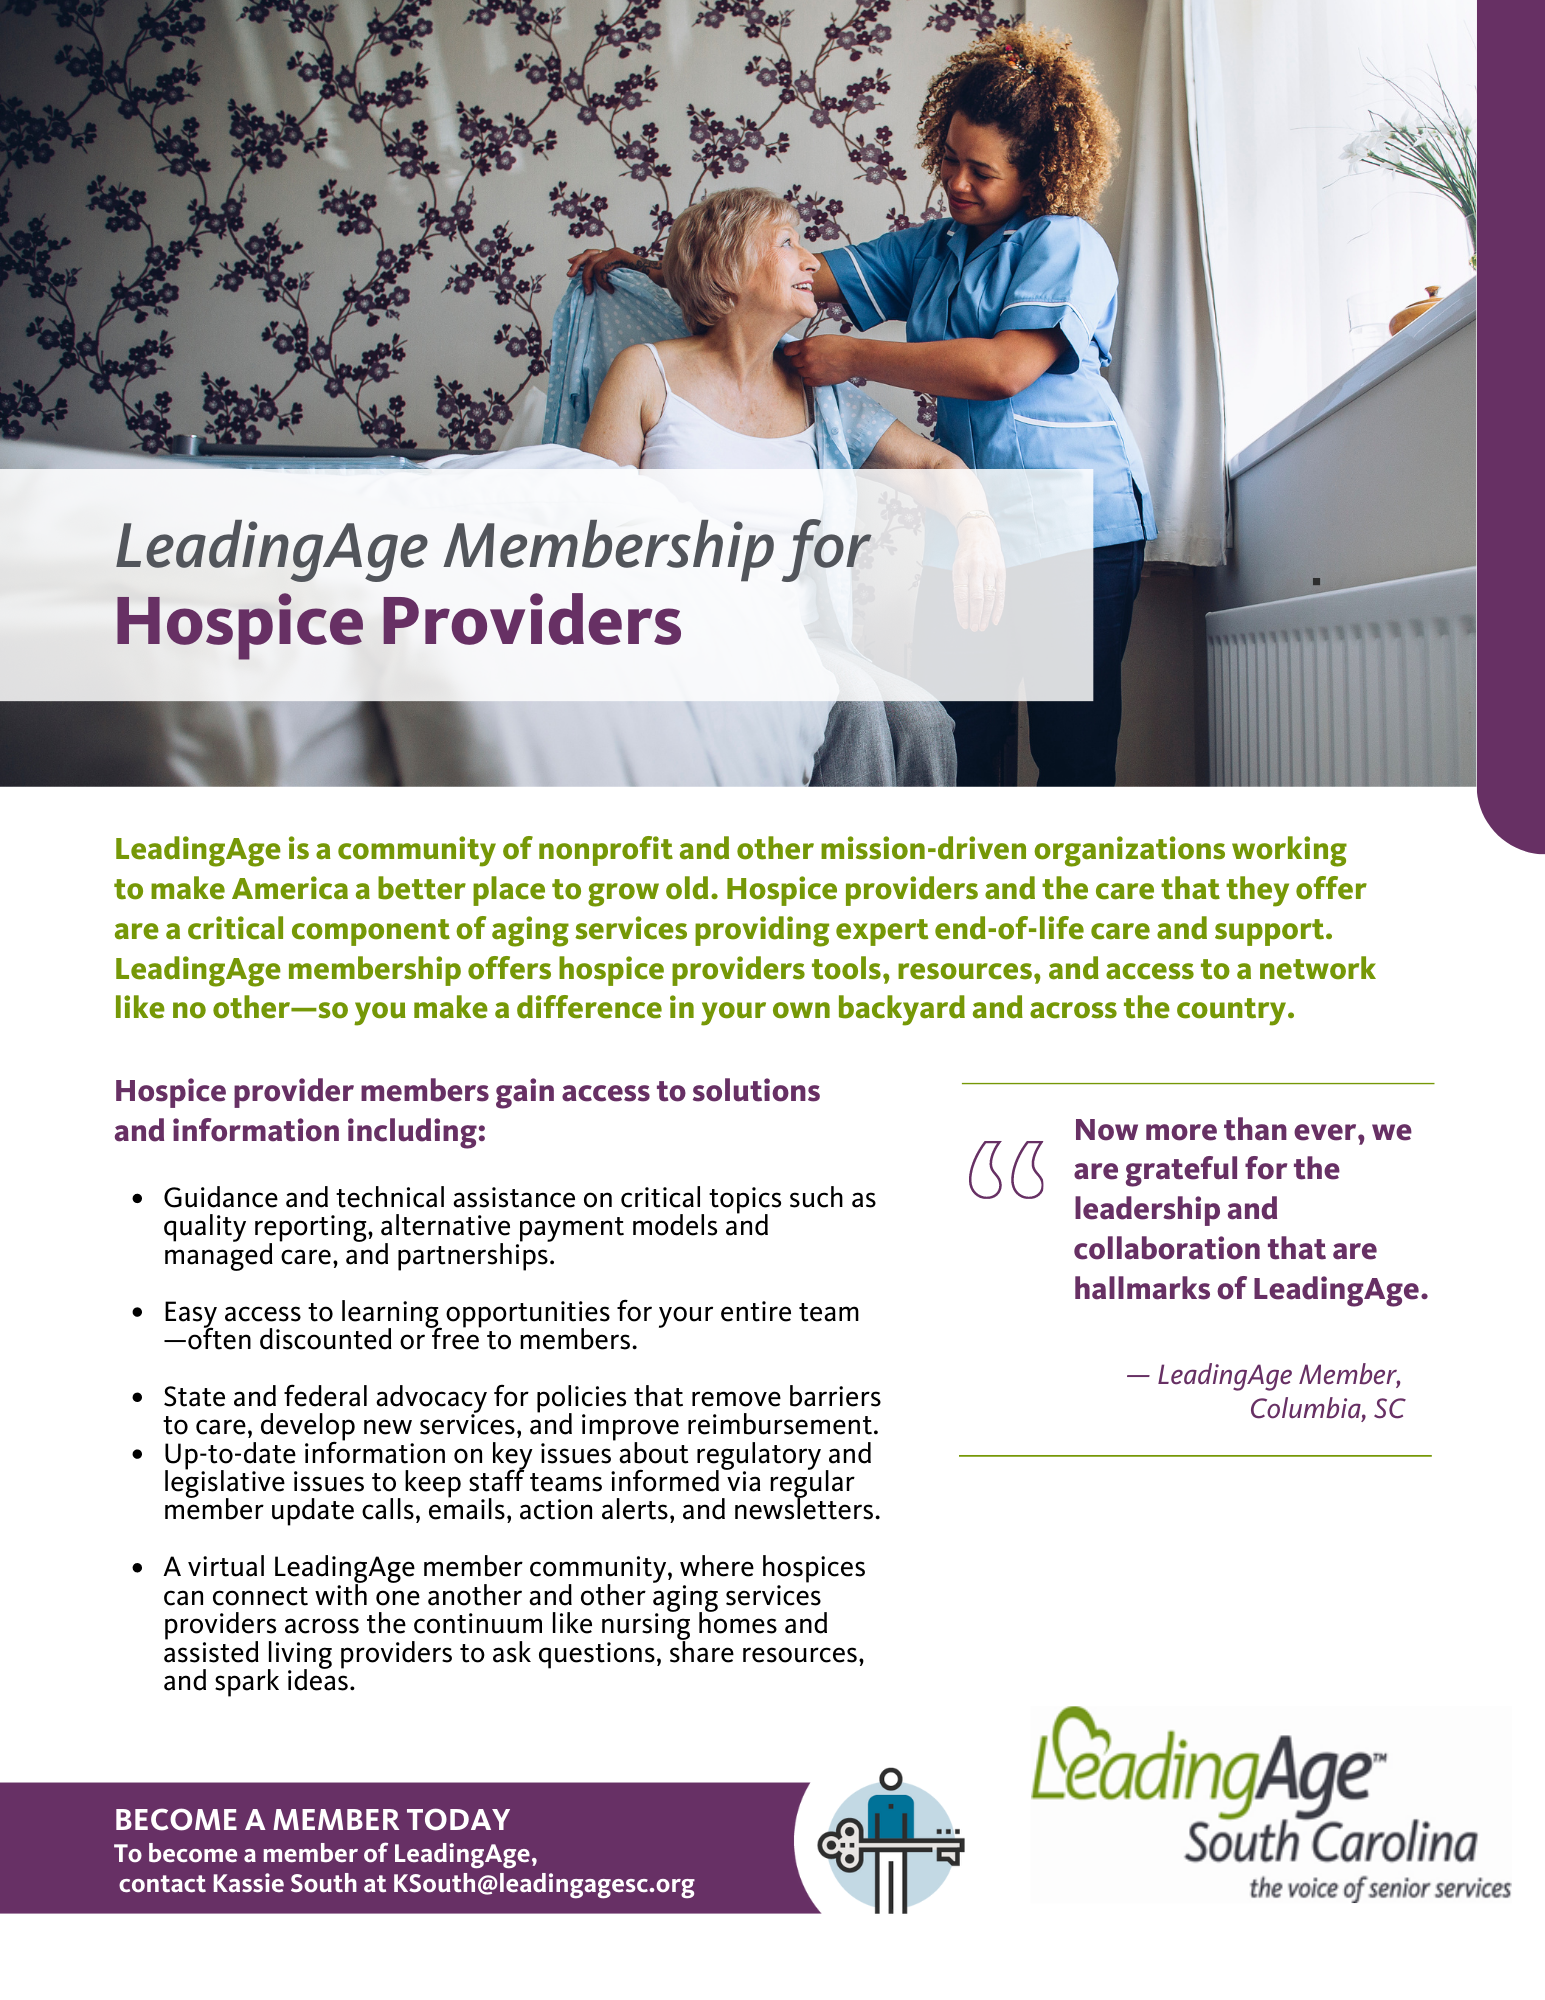 LeadingAge information for Hospice Membership